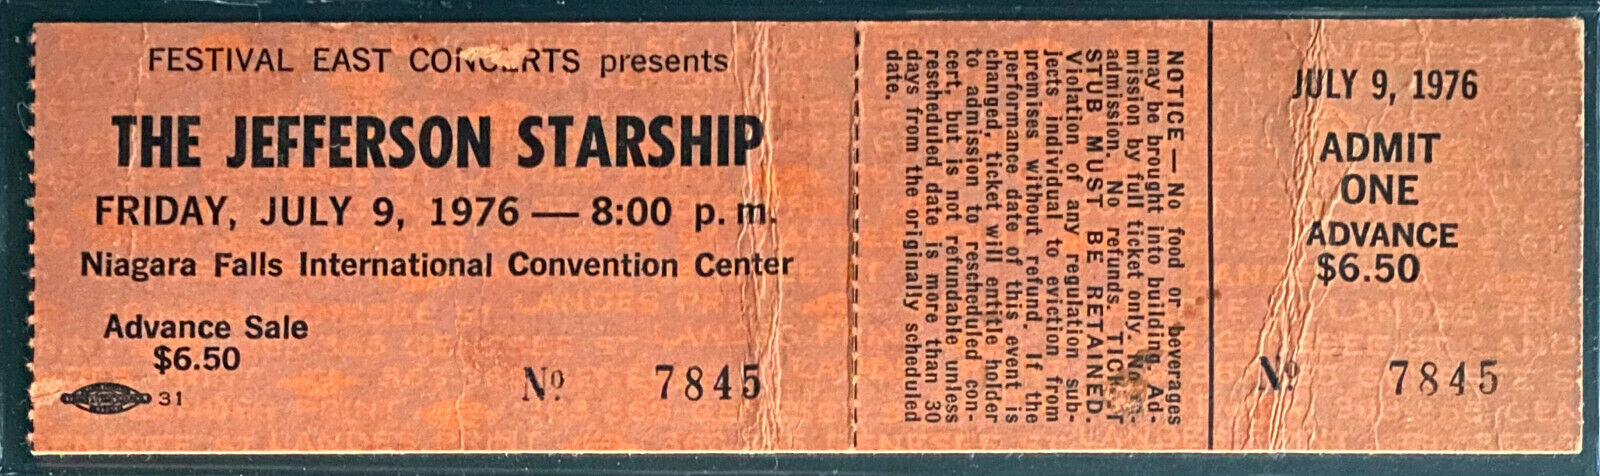 JeffersonStarship1976-07-09NiagaraFallsConventionCenterNY (4).jpg